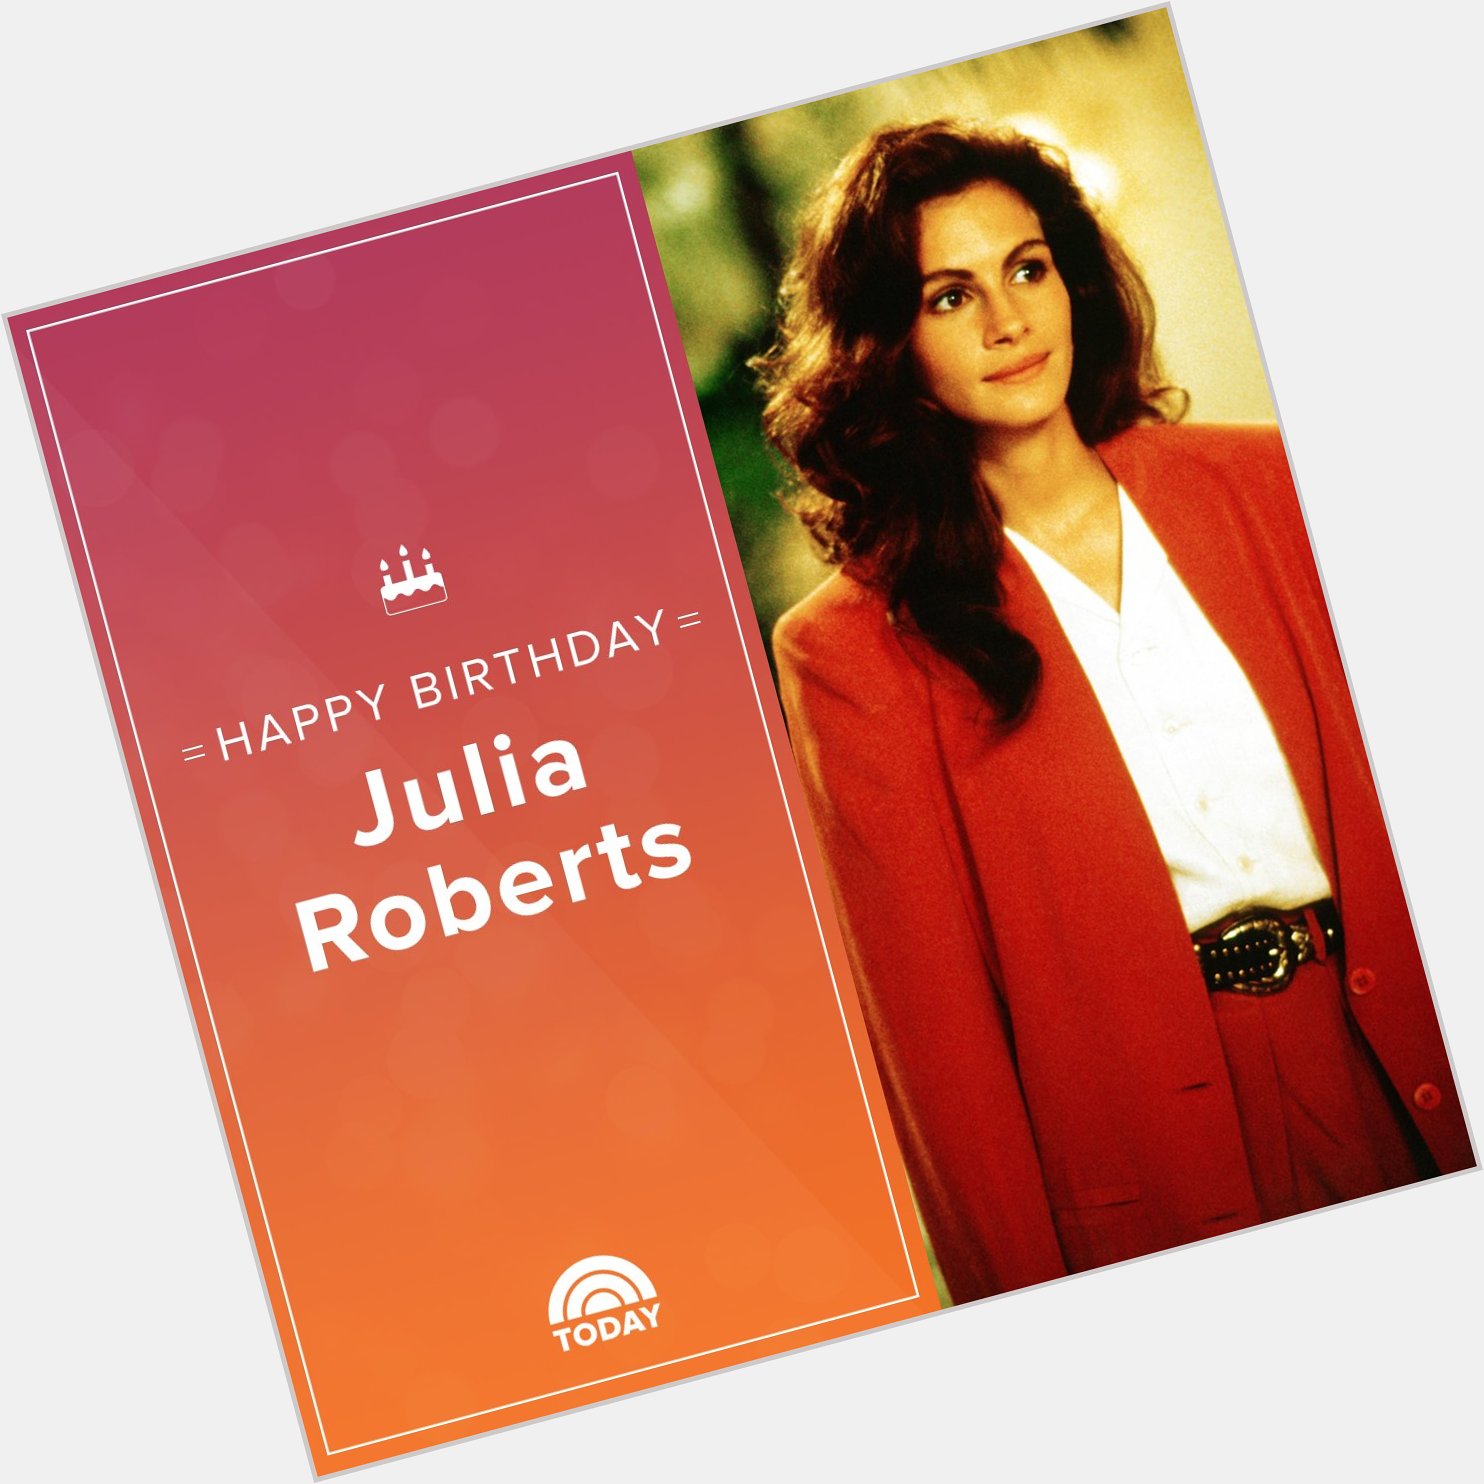 Wishing a pretty happy birthday to Julia Roberts! 